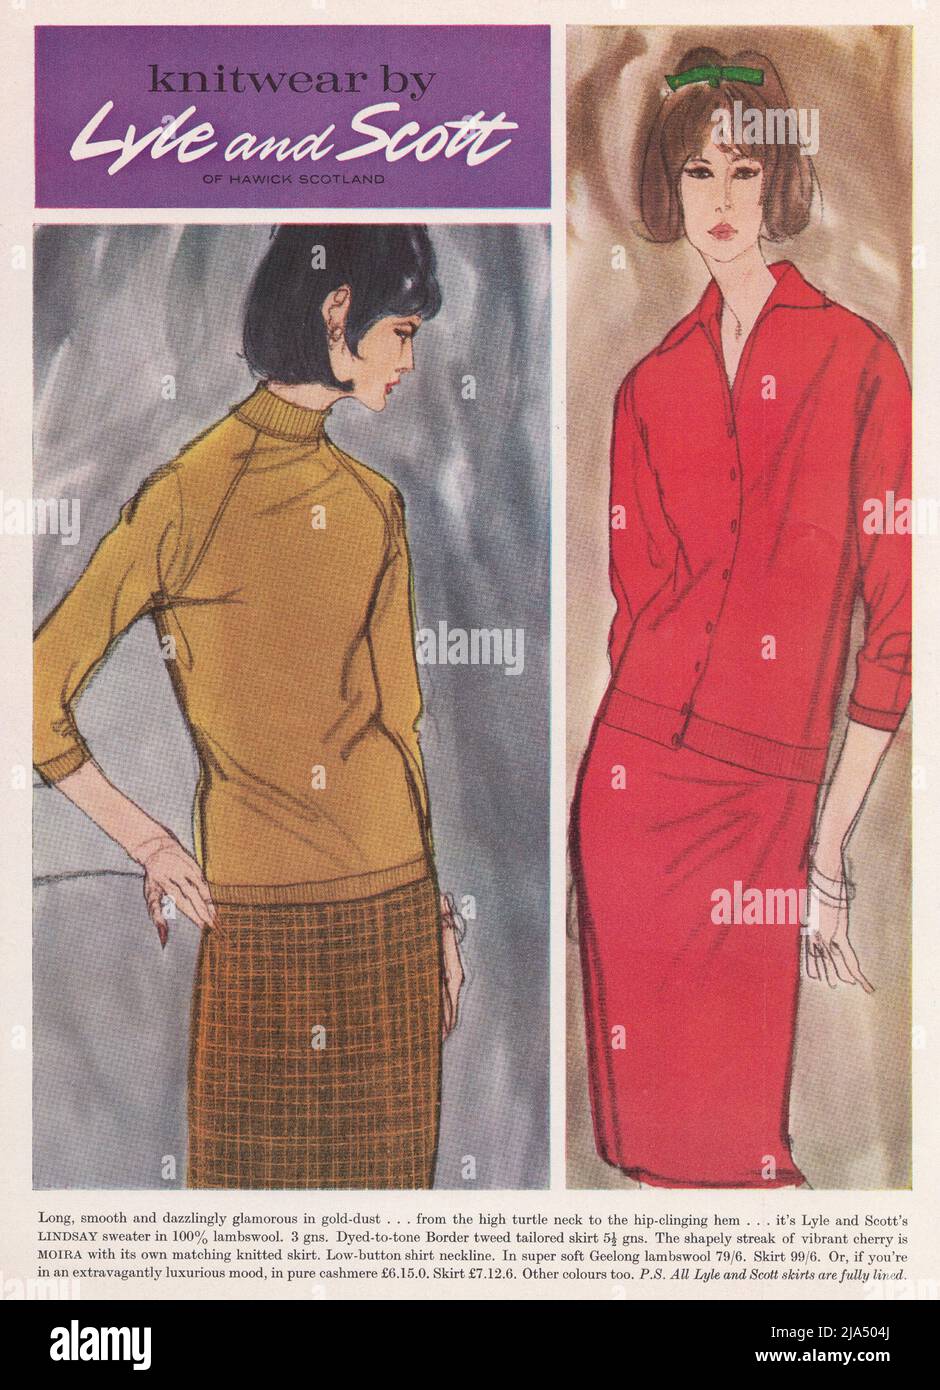 Lyle & Scott's of Hawick Scotland knitwear vintage paper advertisement  advert 1960s 1970s Stock Photo - Alamy